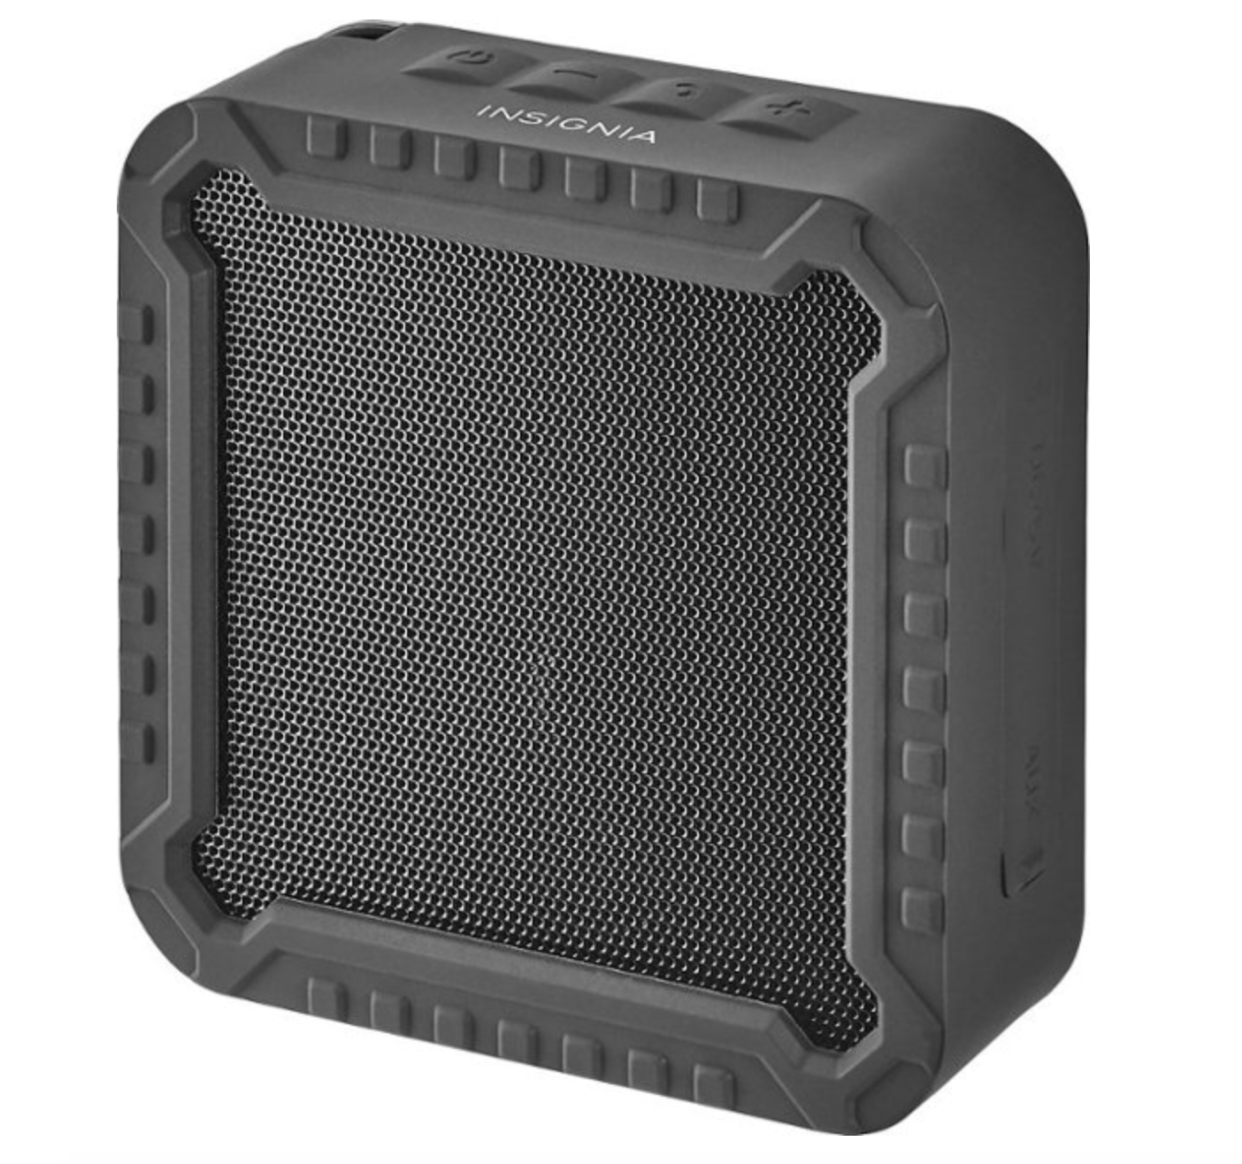 Insignia Rugged Portable Bluetooth Speaker